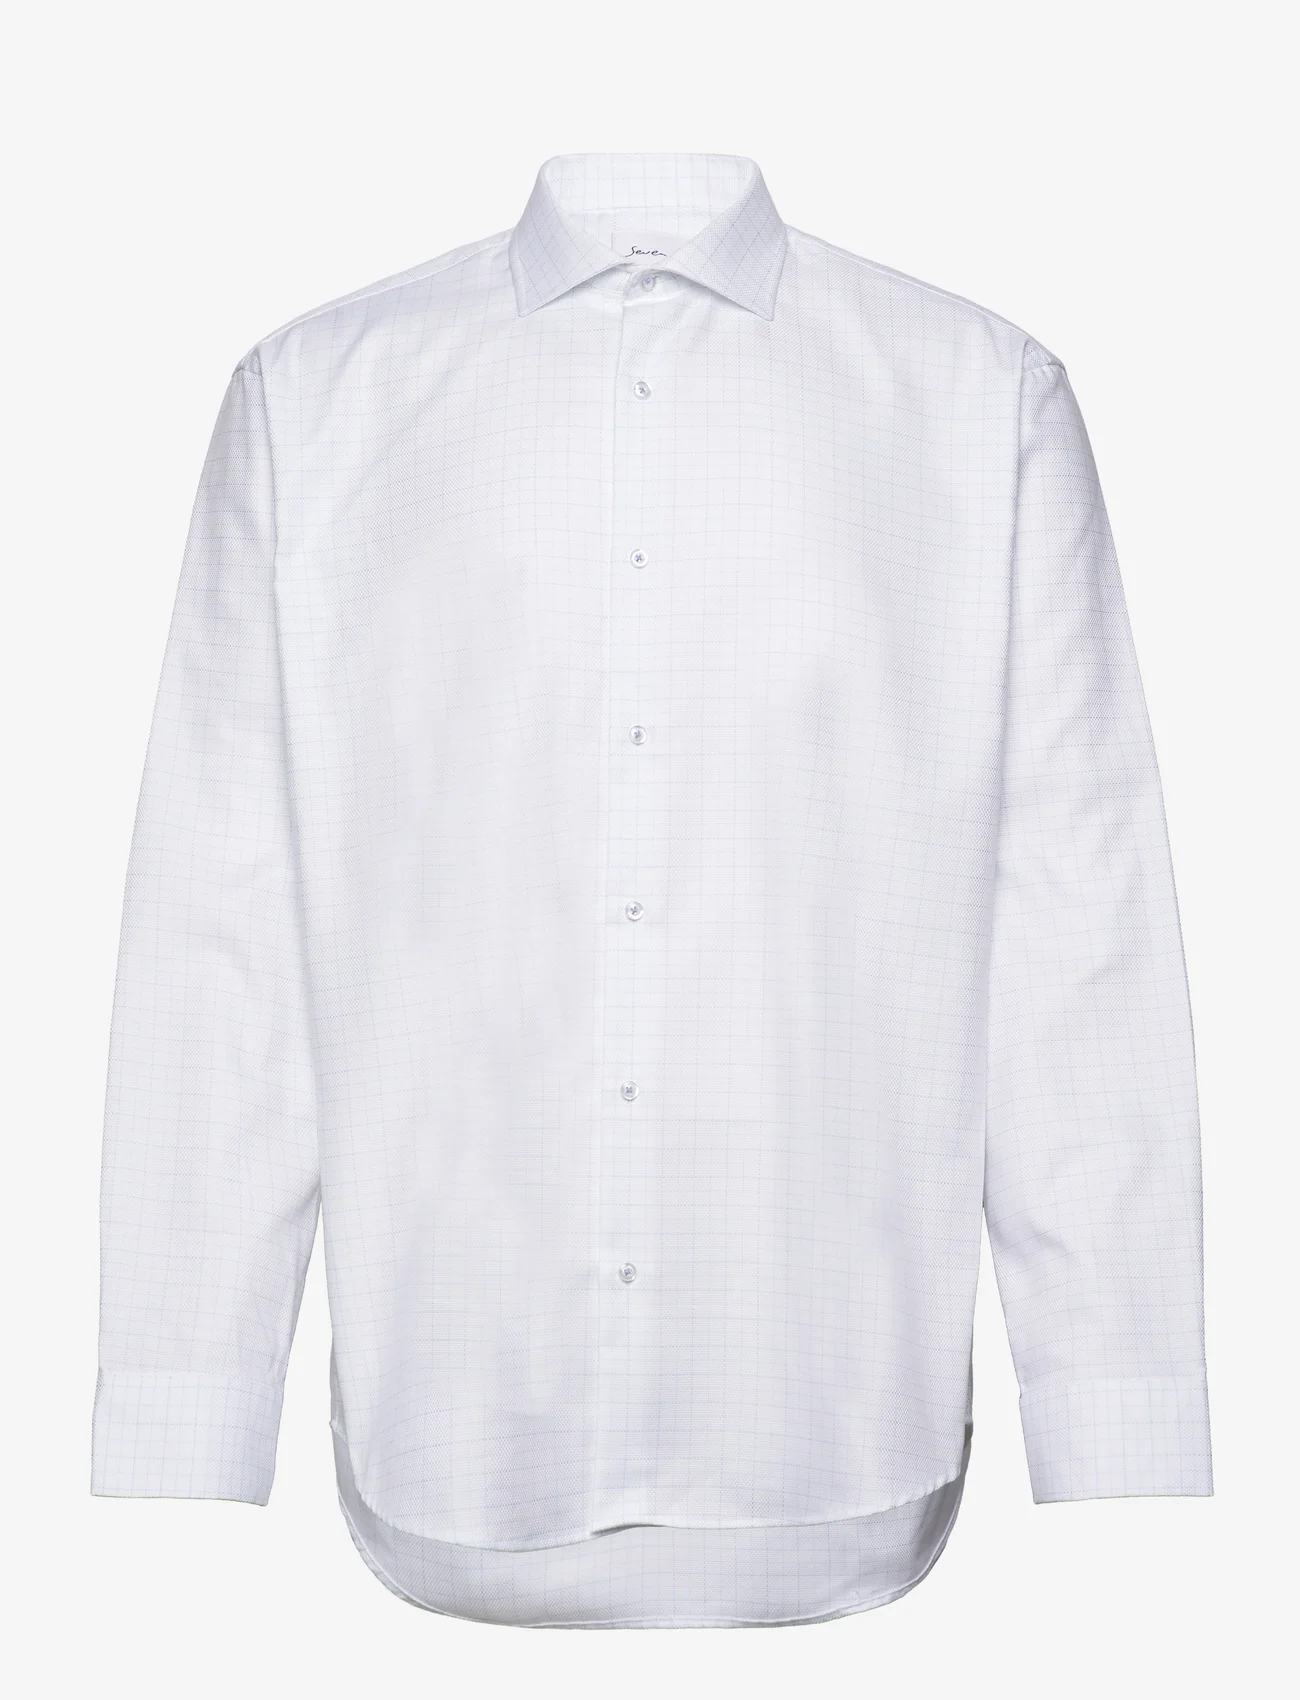 Seven Seas Copenhagen - Dallas - 23005 - basic skjortor - white - 0